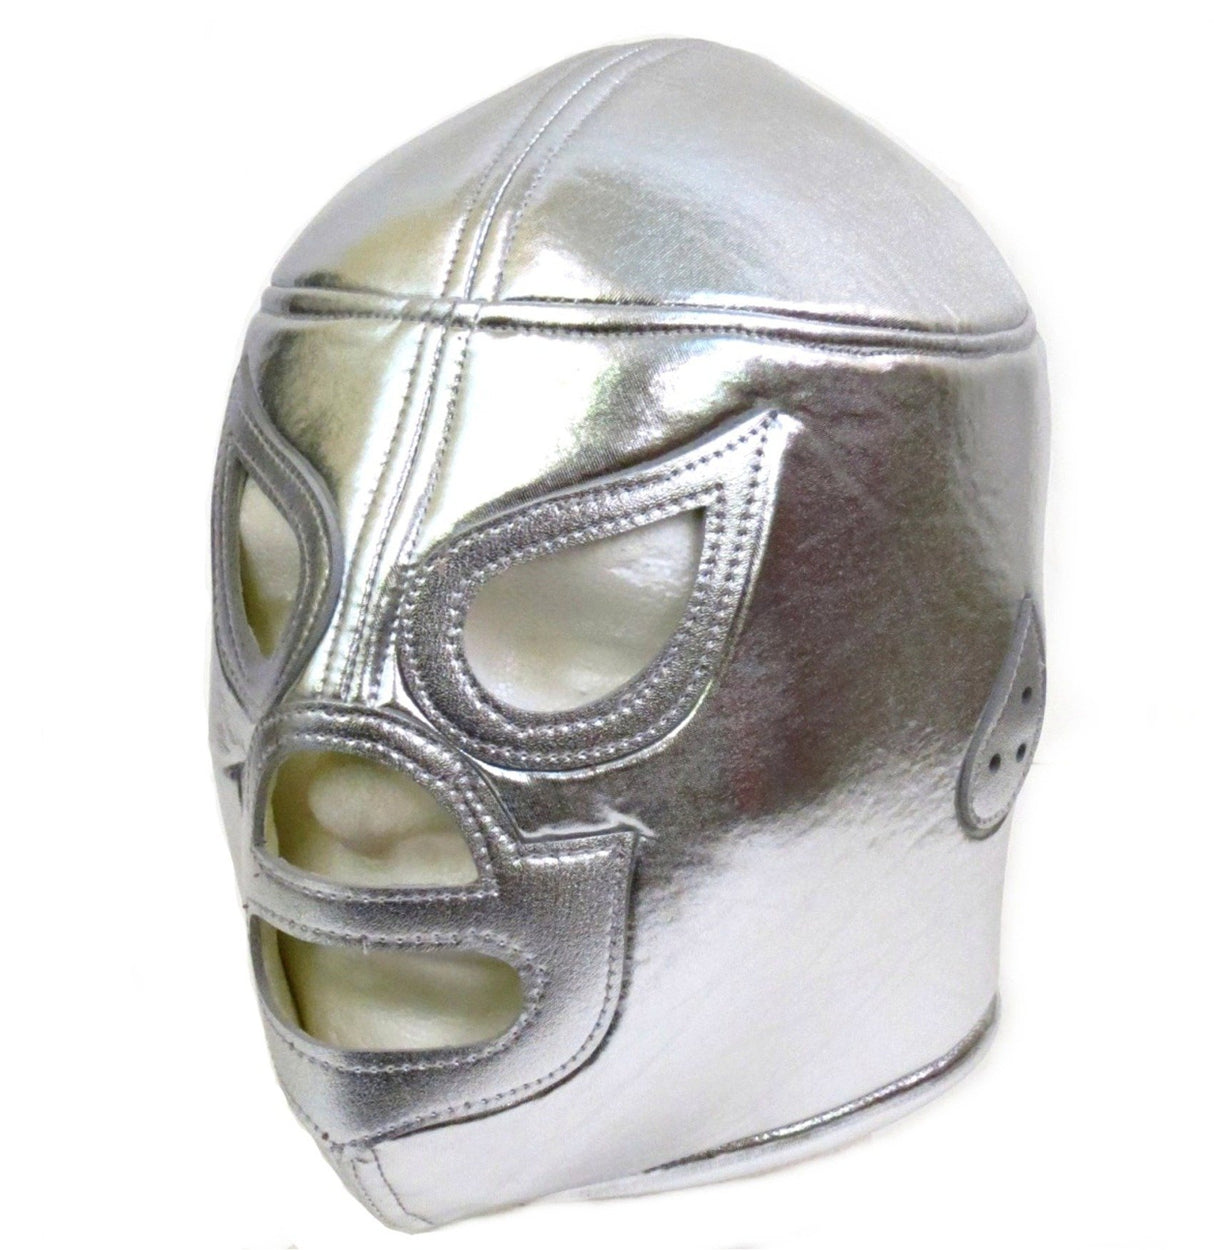 EL Santo Adult Lucha Libre Wrestling Mask (pro-fit) Costume Wear - Silver